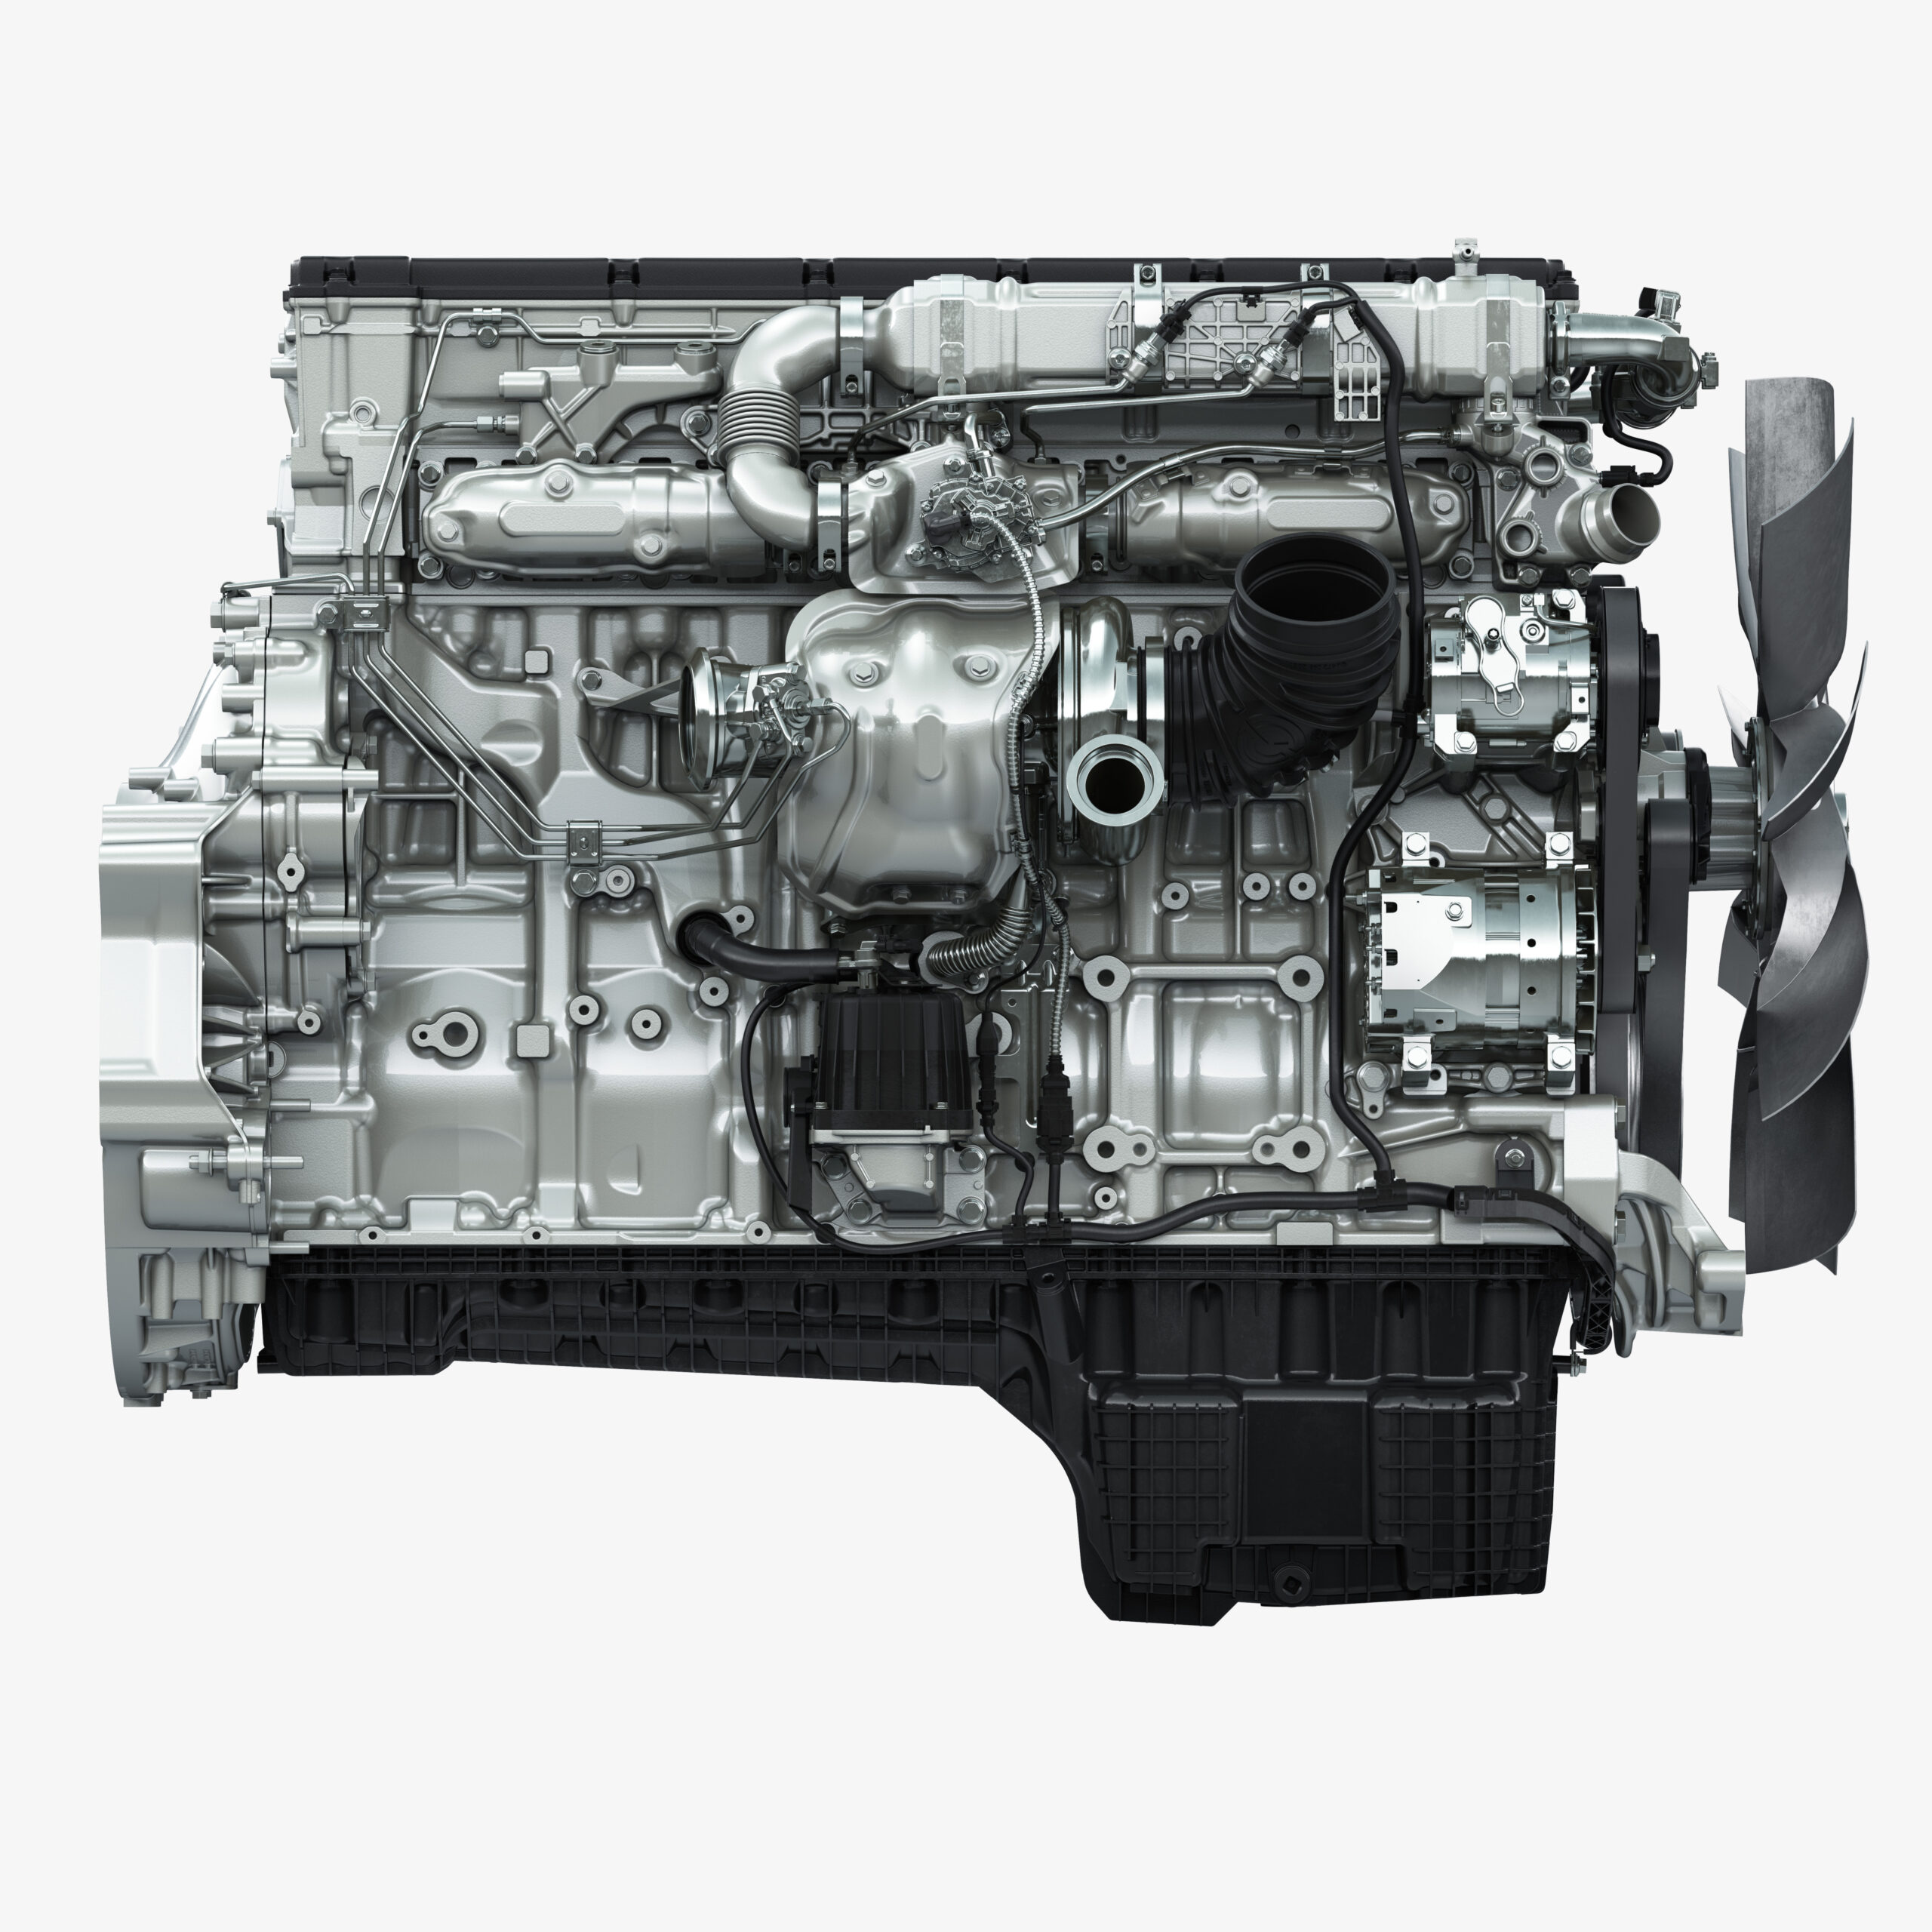 Dd15 Engine Parts Diagram 1